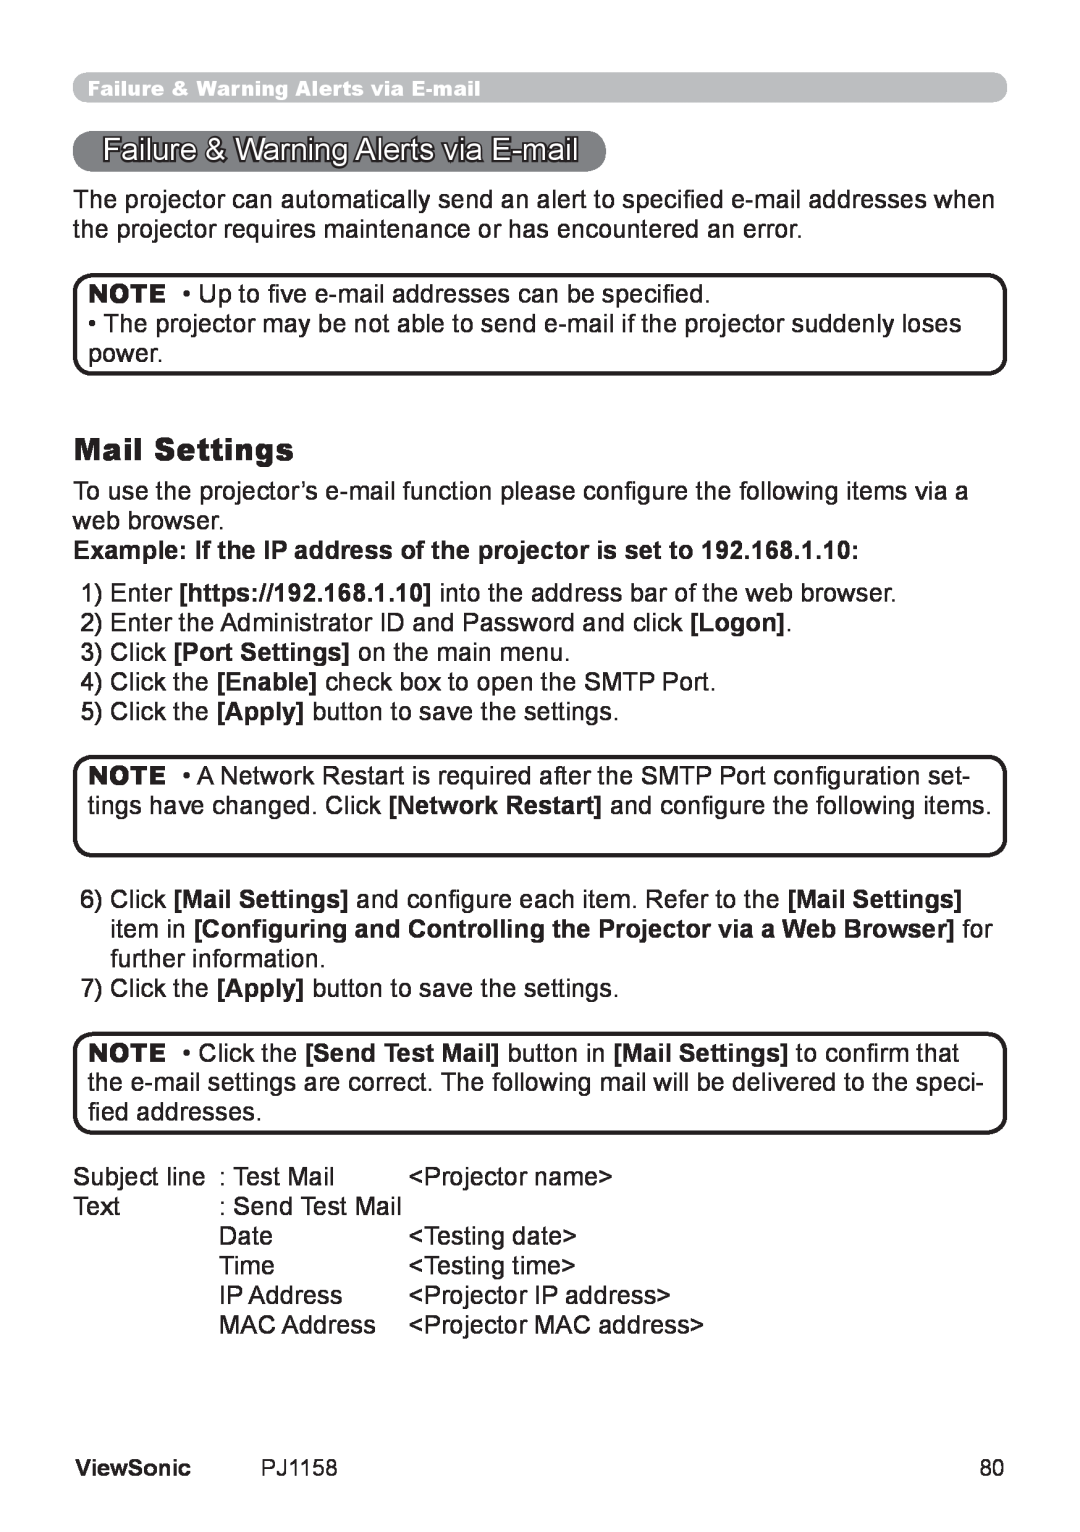 ViewSonic PJ1158 manual Failure & Warning Alerts via E-mail, Mail Settings 